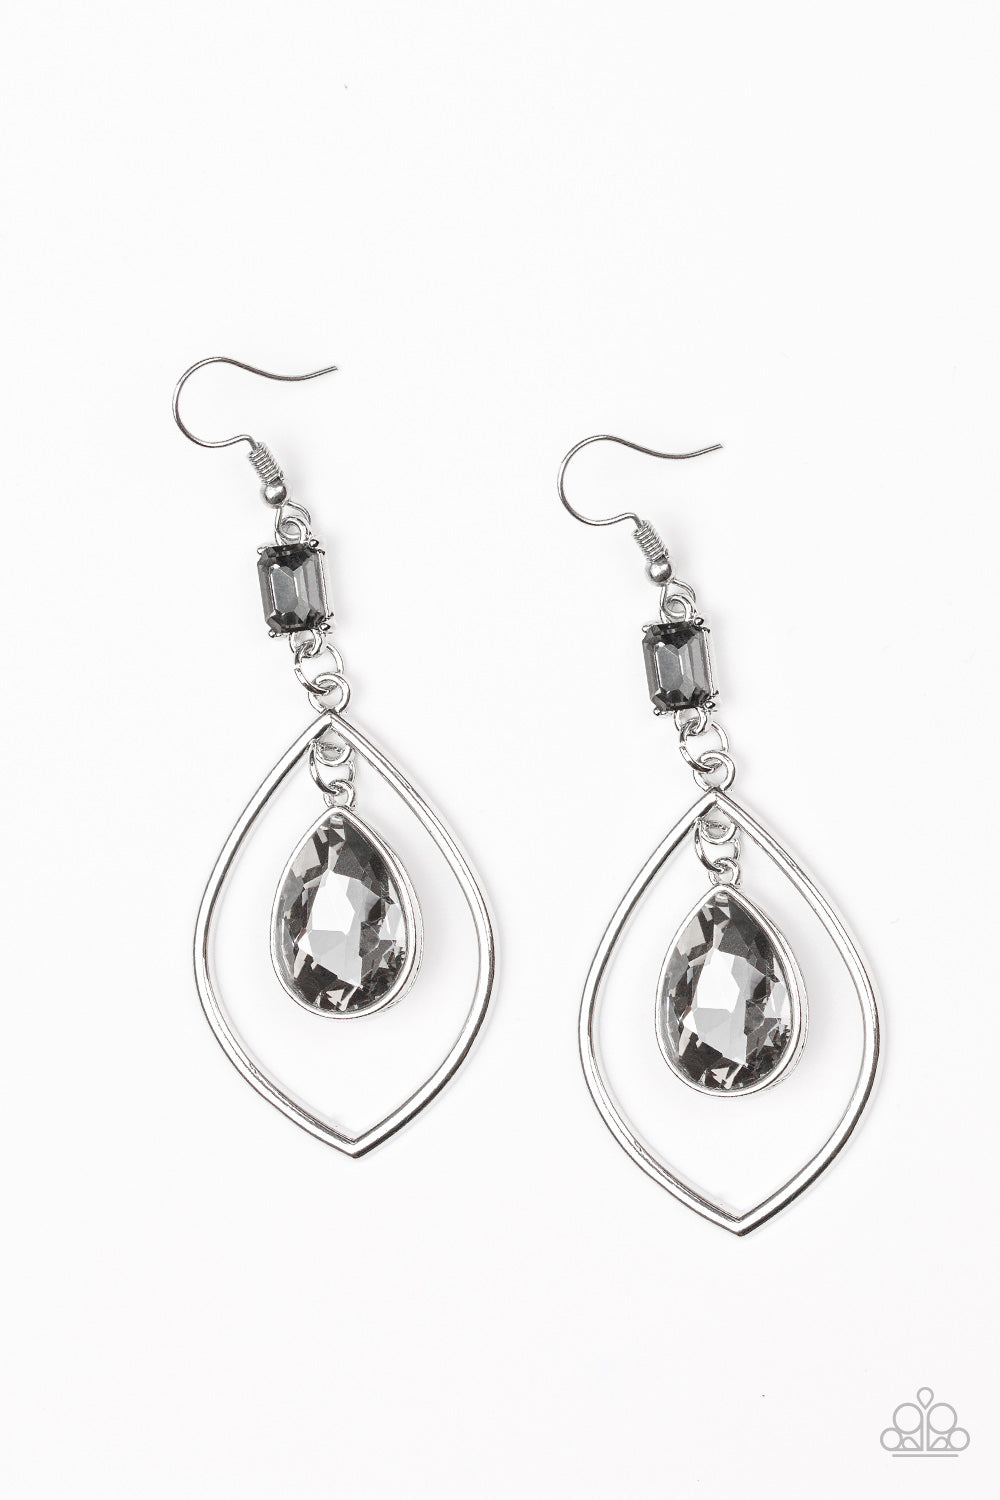 Priceless - Silver earrings